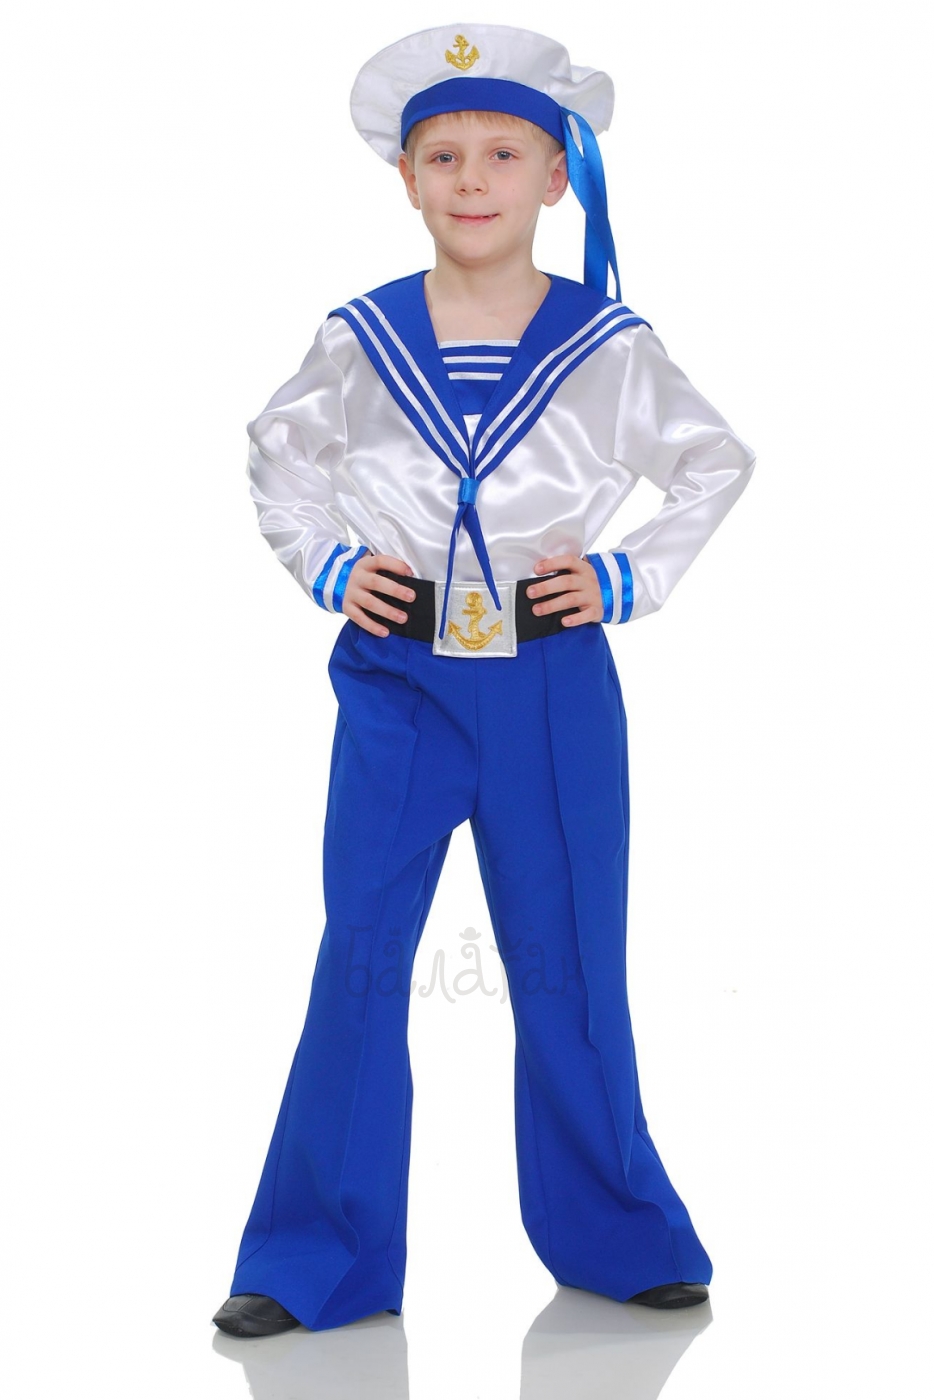 Sailor boy striped kids costume for little boy